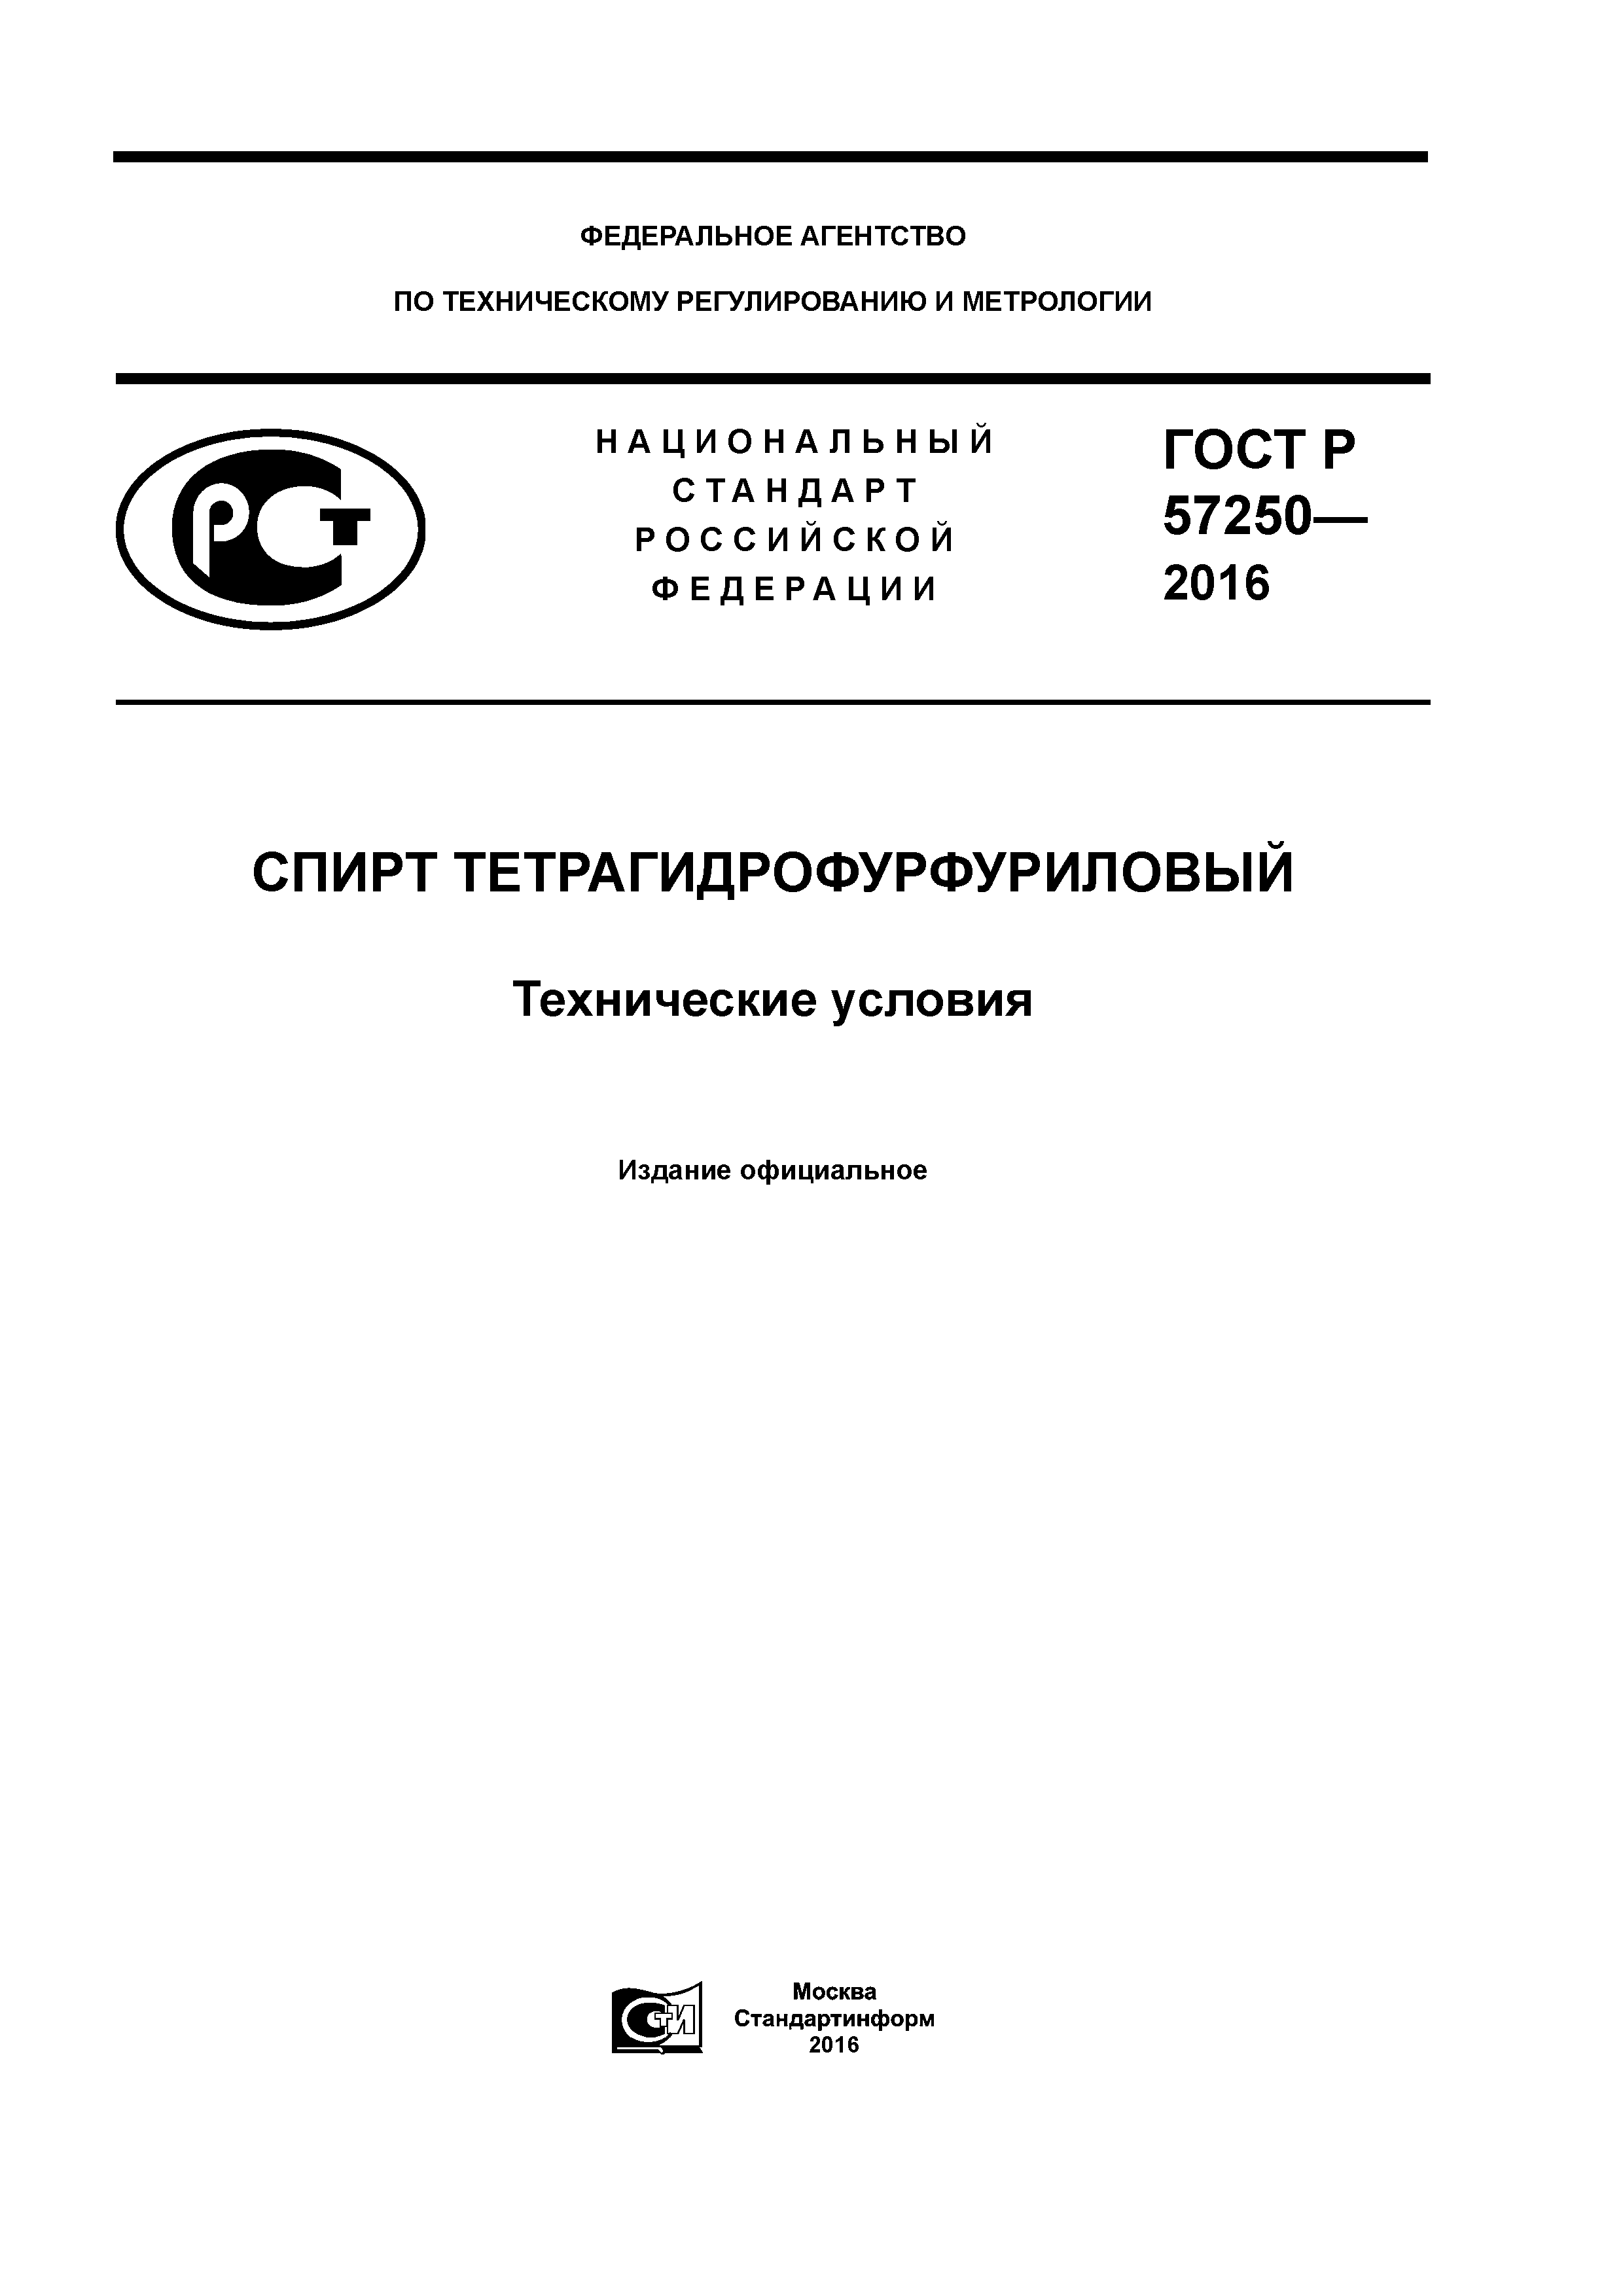 ГОСТ Р 57250-2016